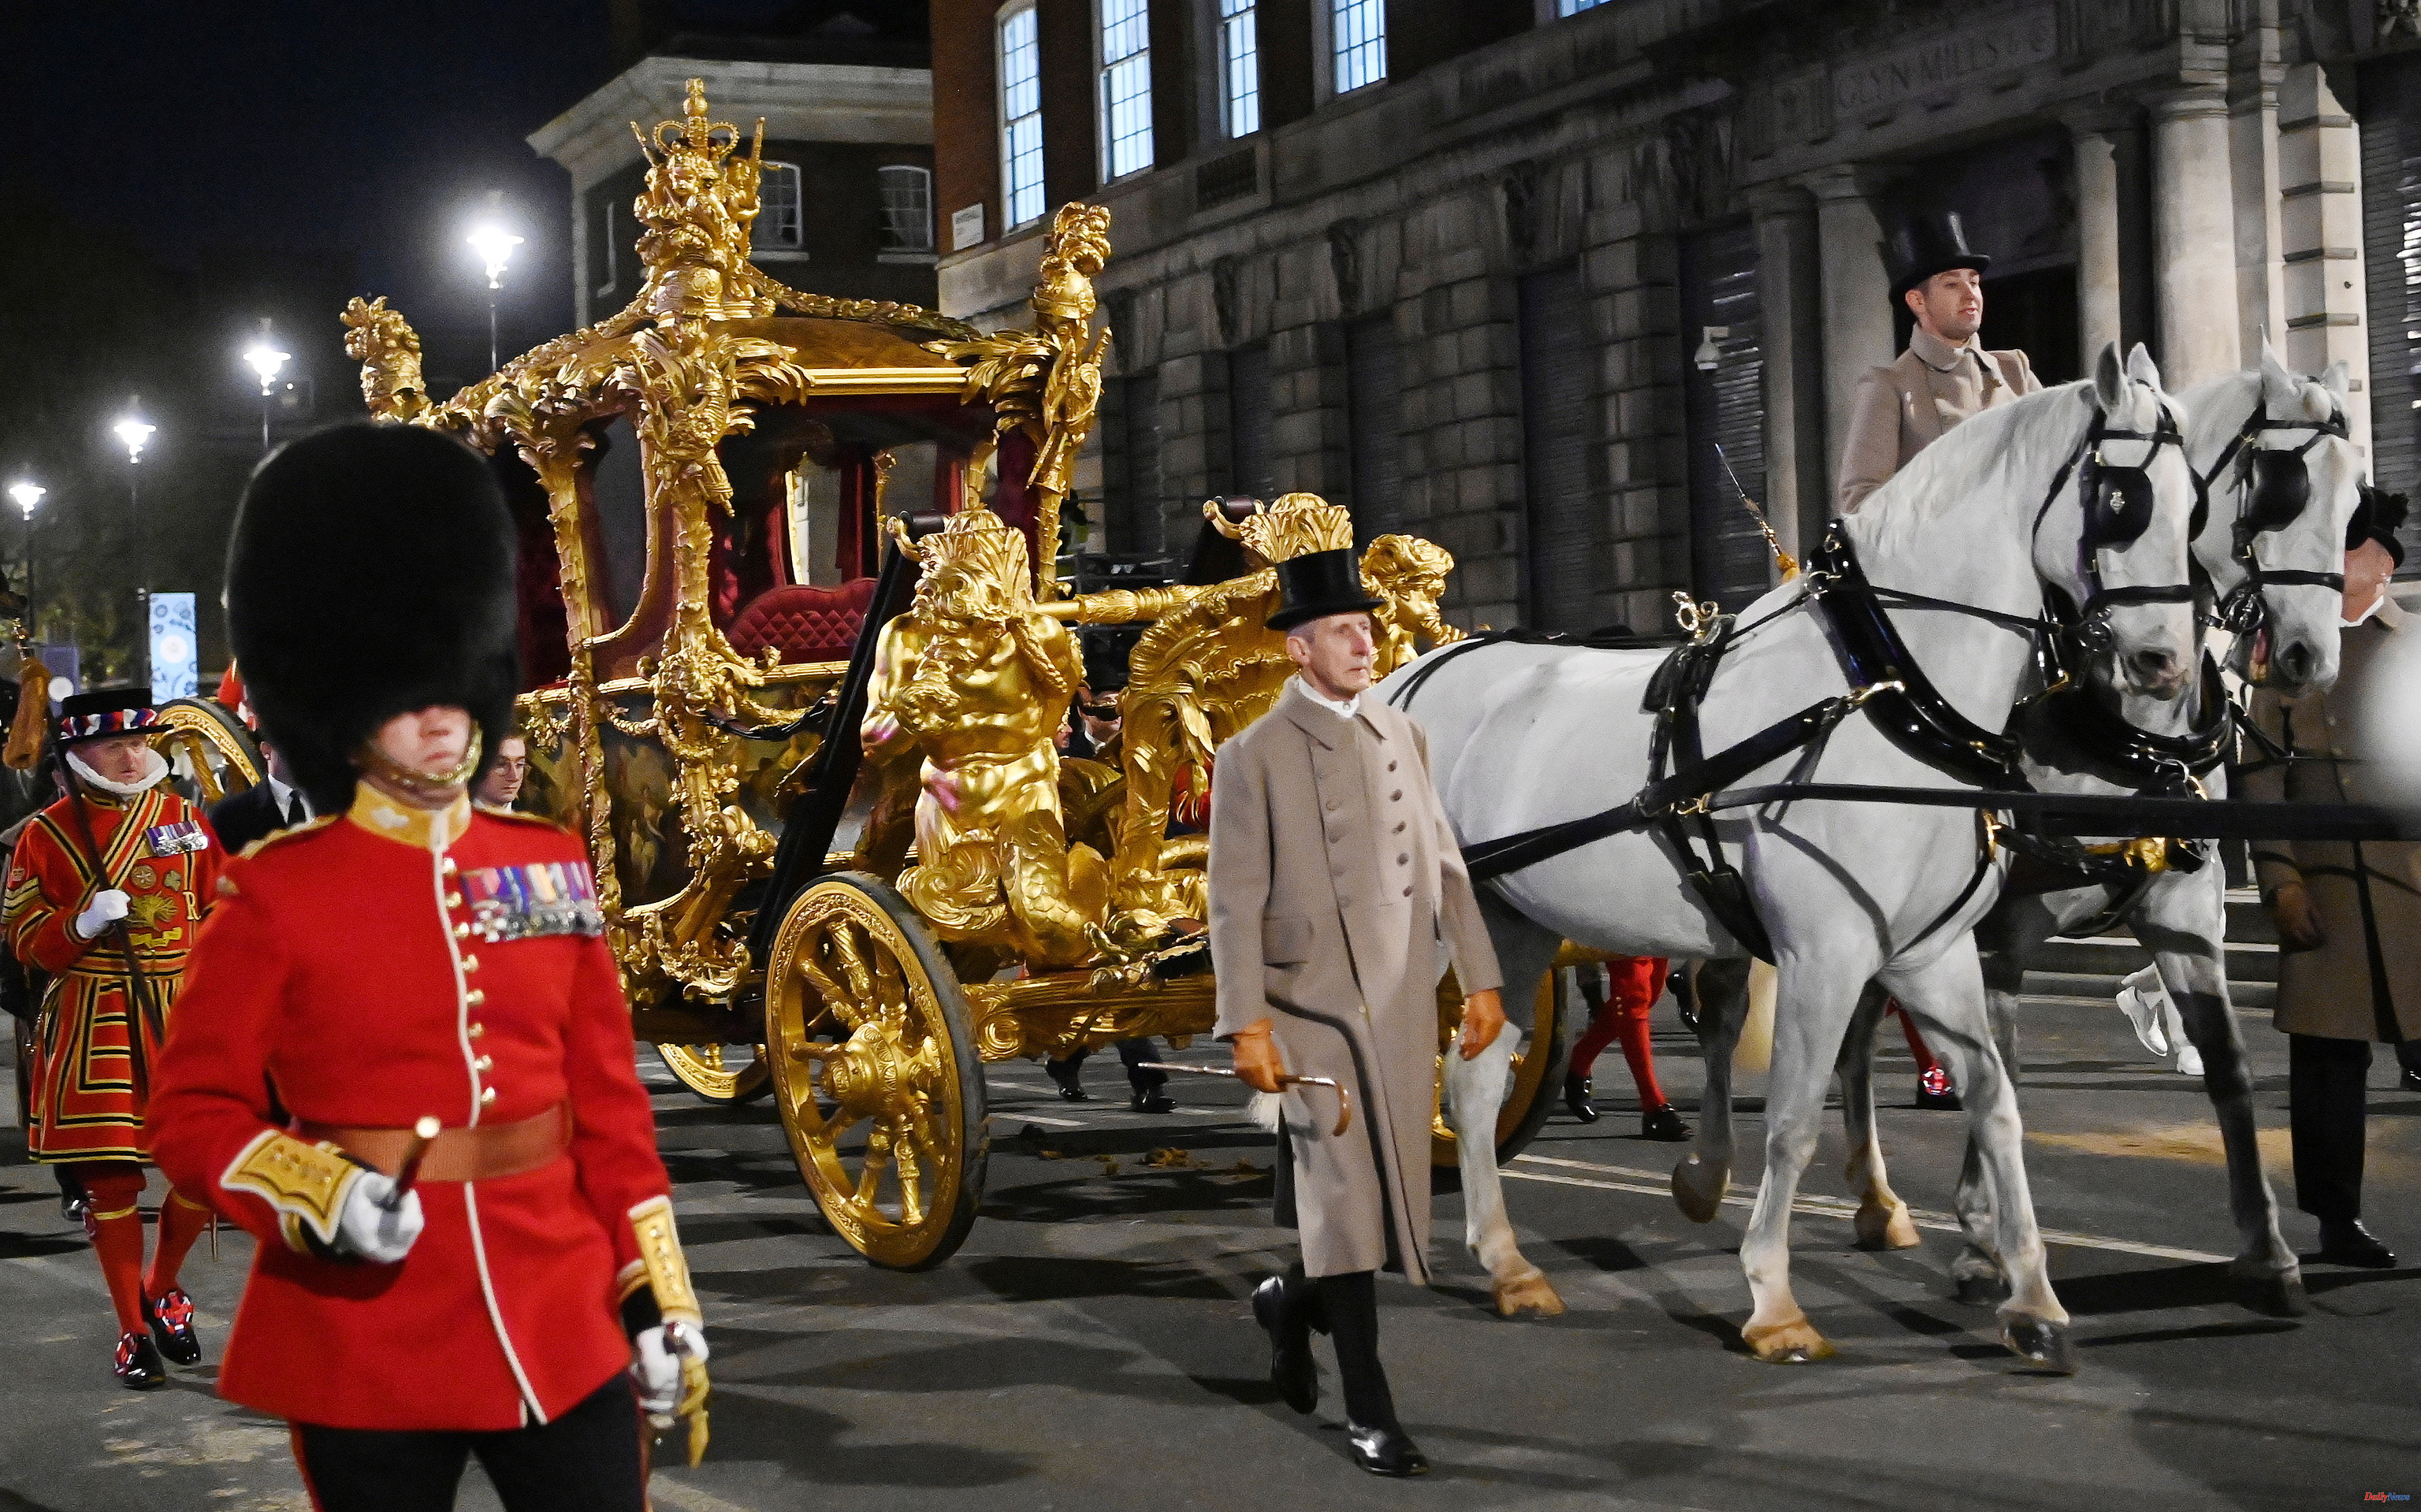 Coronation Anti-monarchists accuse the British government of "intimidation"